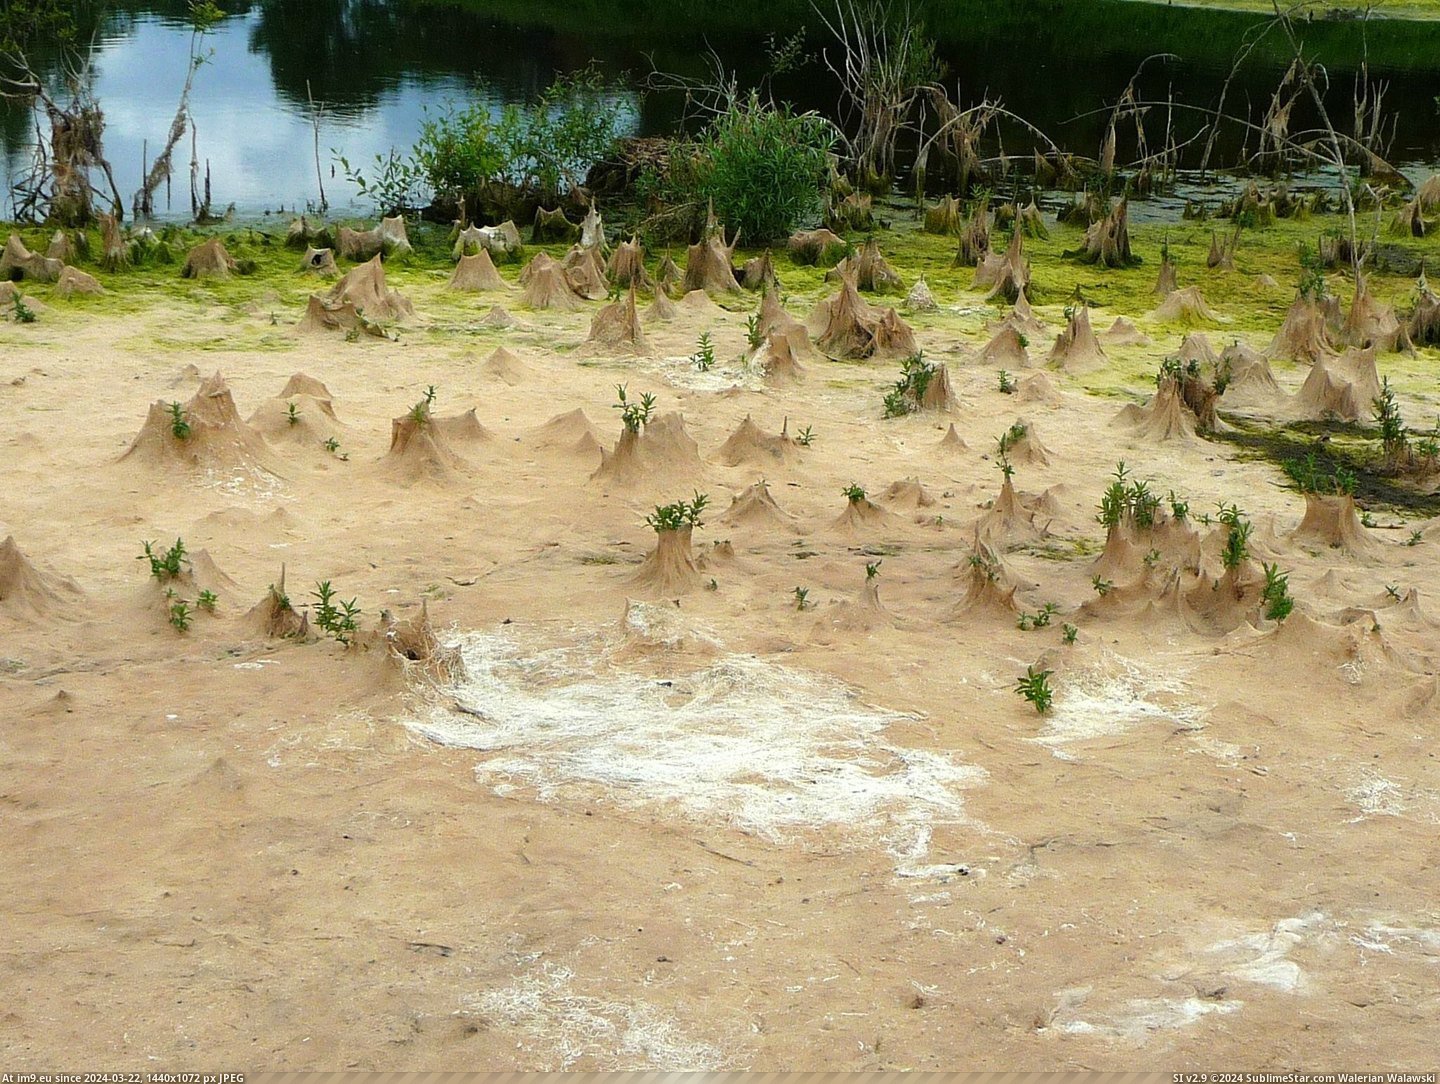 #Landscape #Edge #Dried #Pond #Alien [Mildlyinteresting] This dried-up pond edge looks like an alien landscape. 1 Pic. (Image of album My r/MILDLYINTERESTING favs))